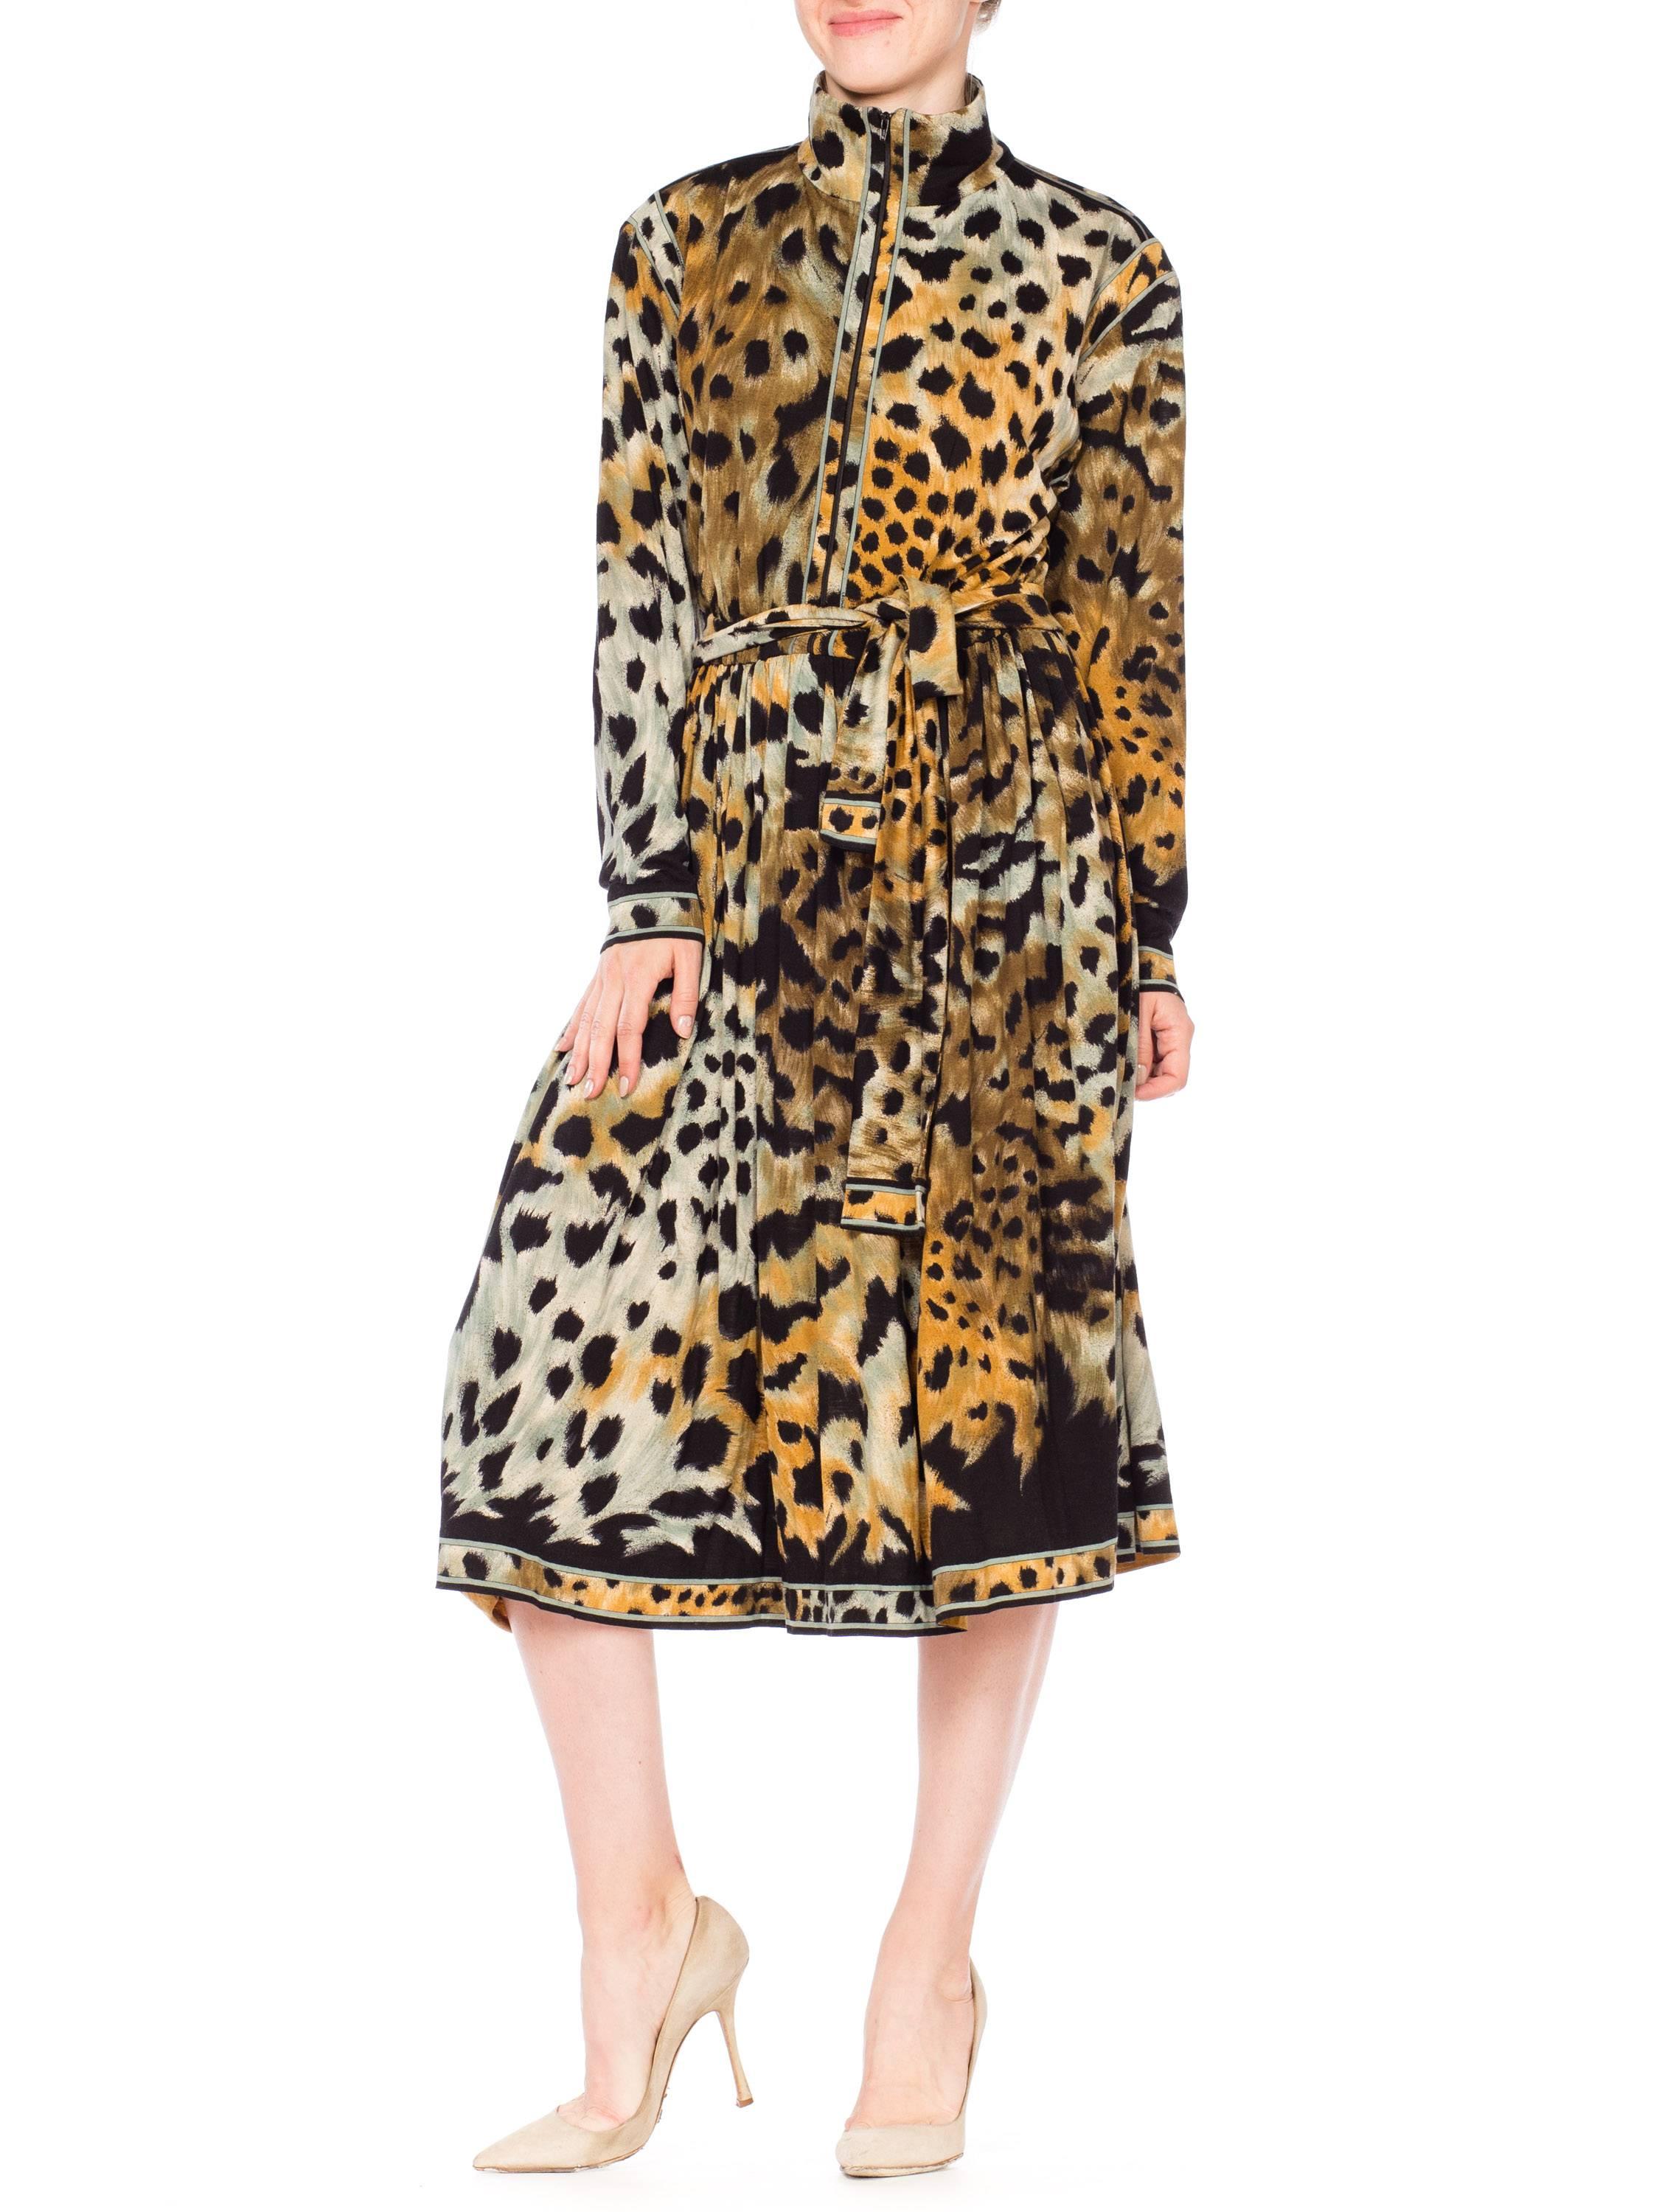 Leopard Print Leonard French Jersey Dress 5